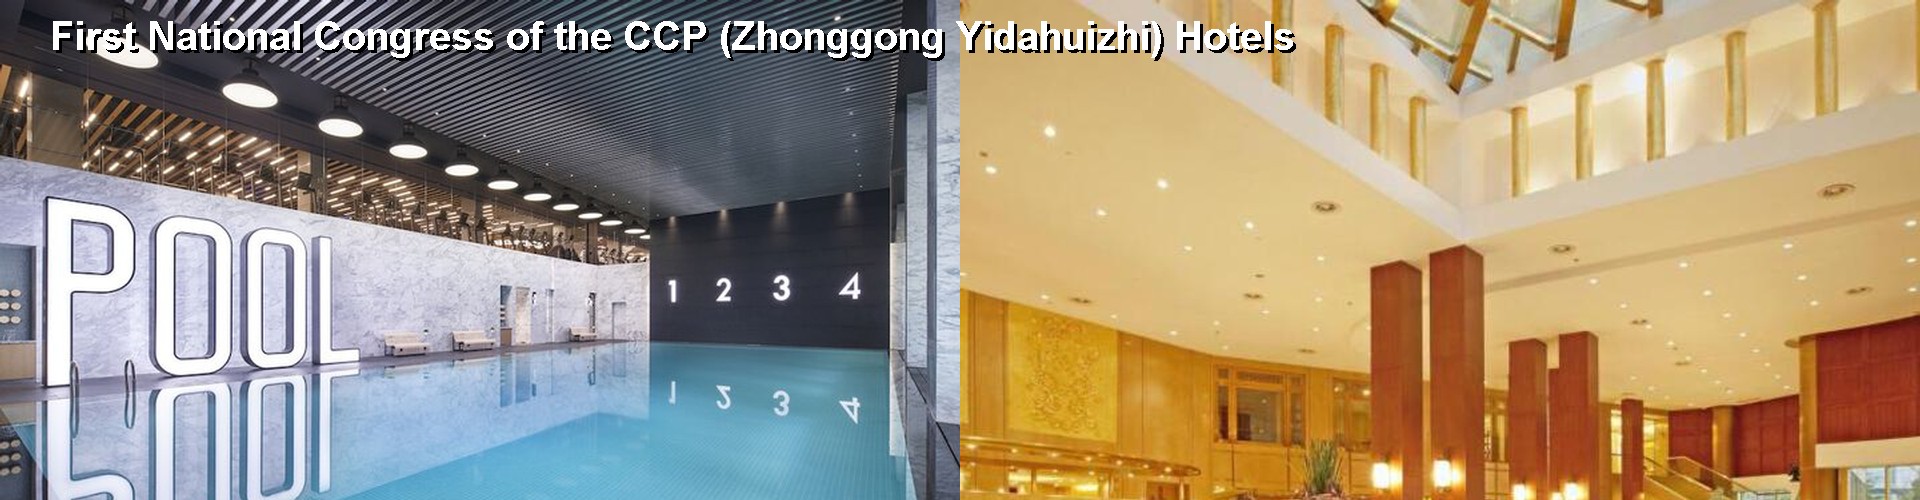 5 Best Hotels near First National Congress of the CCP (Zhonggong Yidahuizhi)